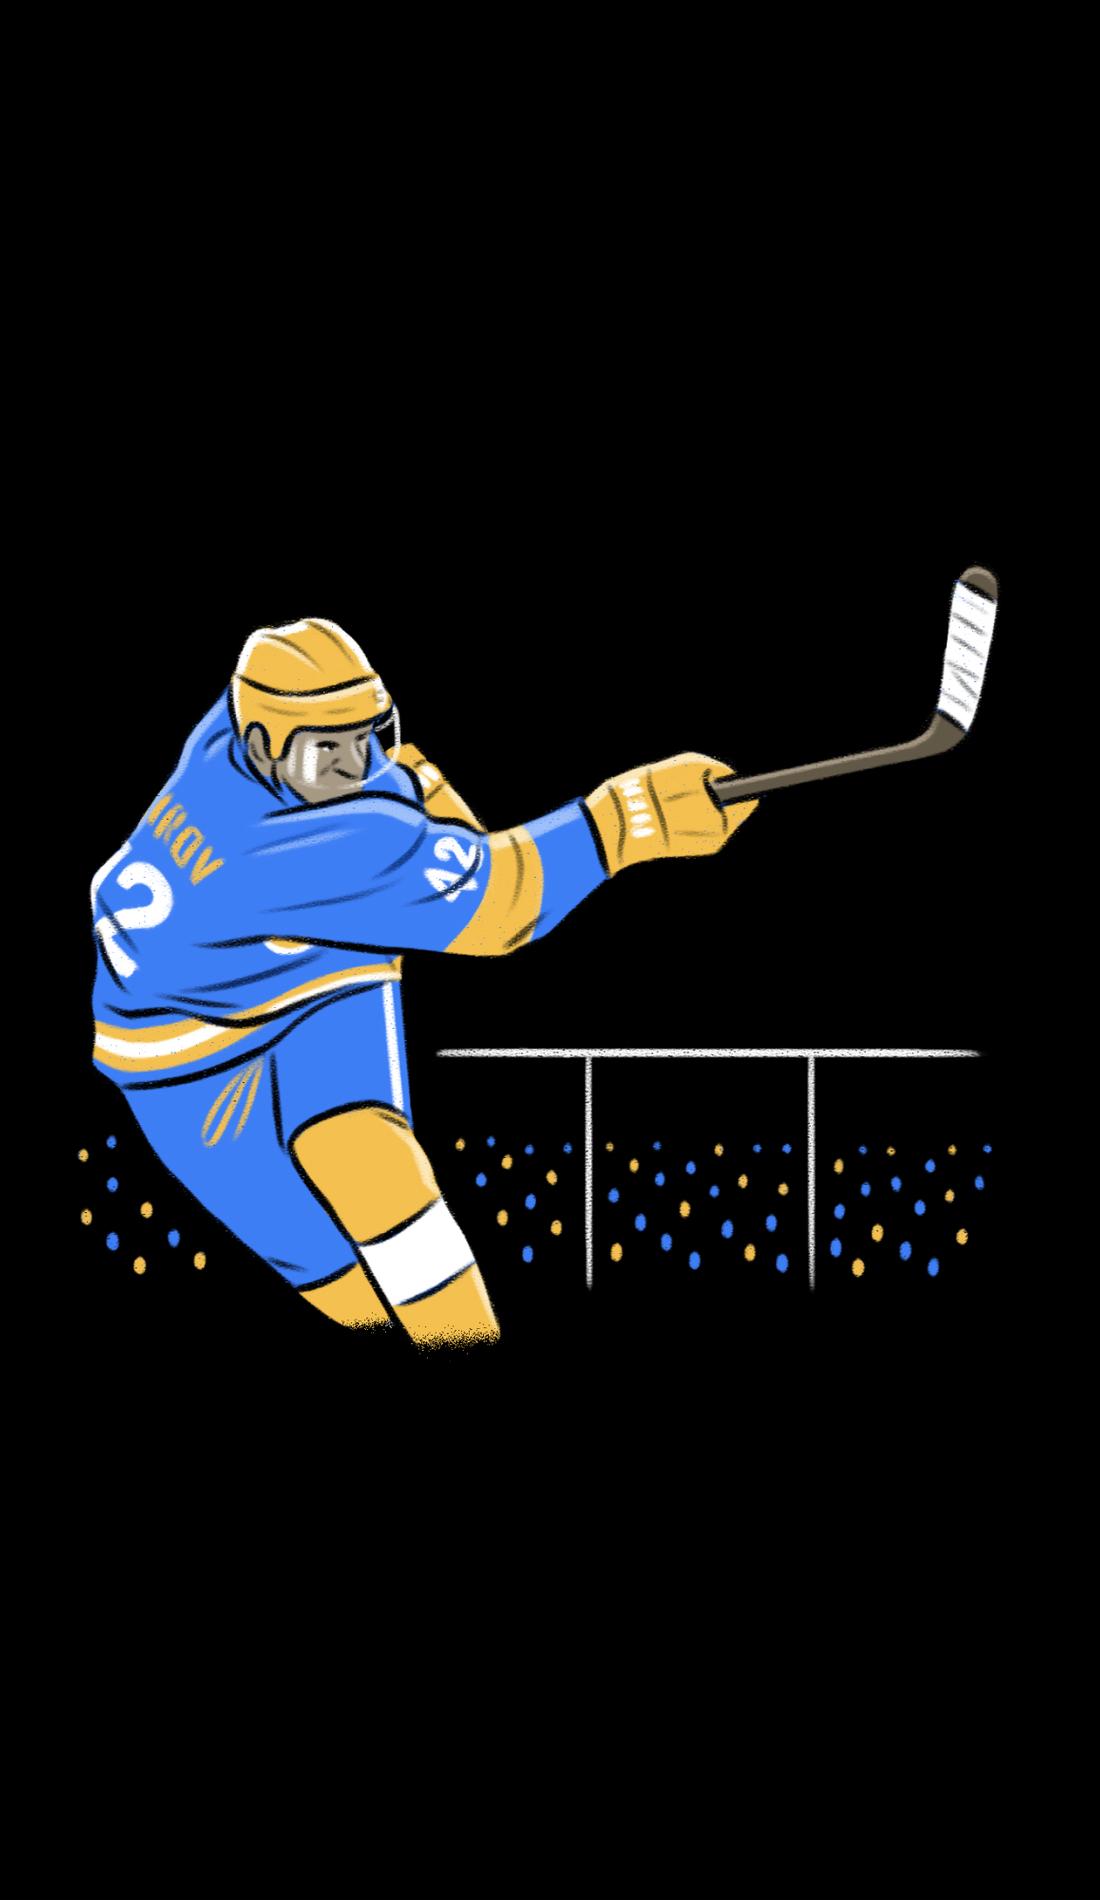 Pick a jersey: Islanders' Stadium Series or Senators' Heritage Classic